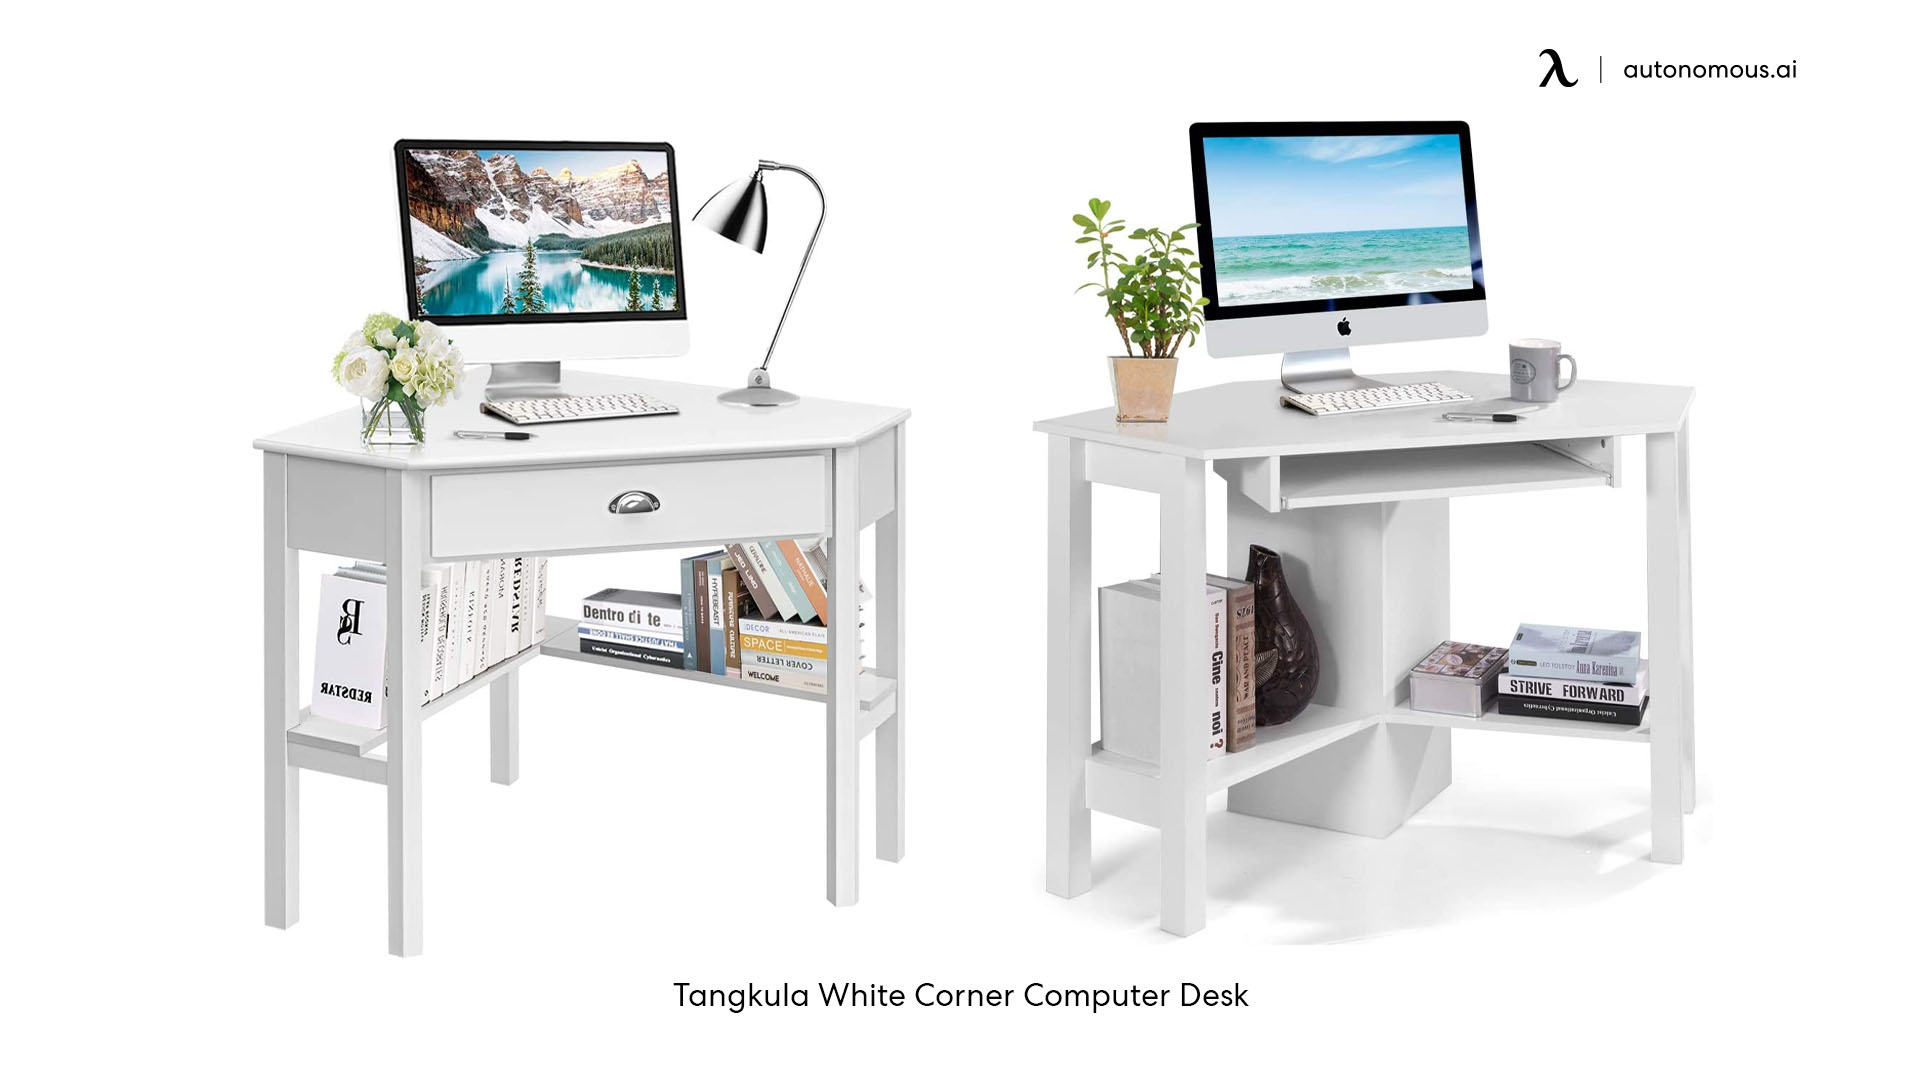 Tangkula White Corner Computer Desk